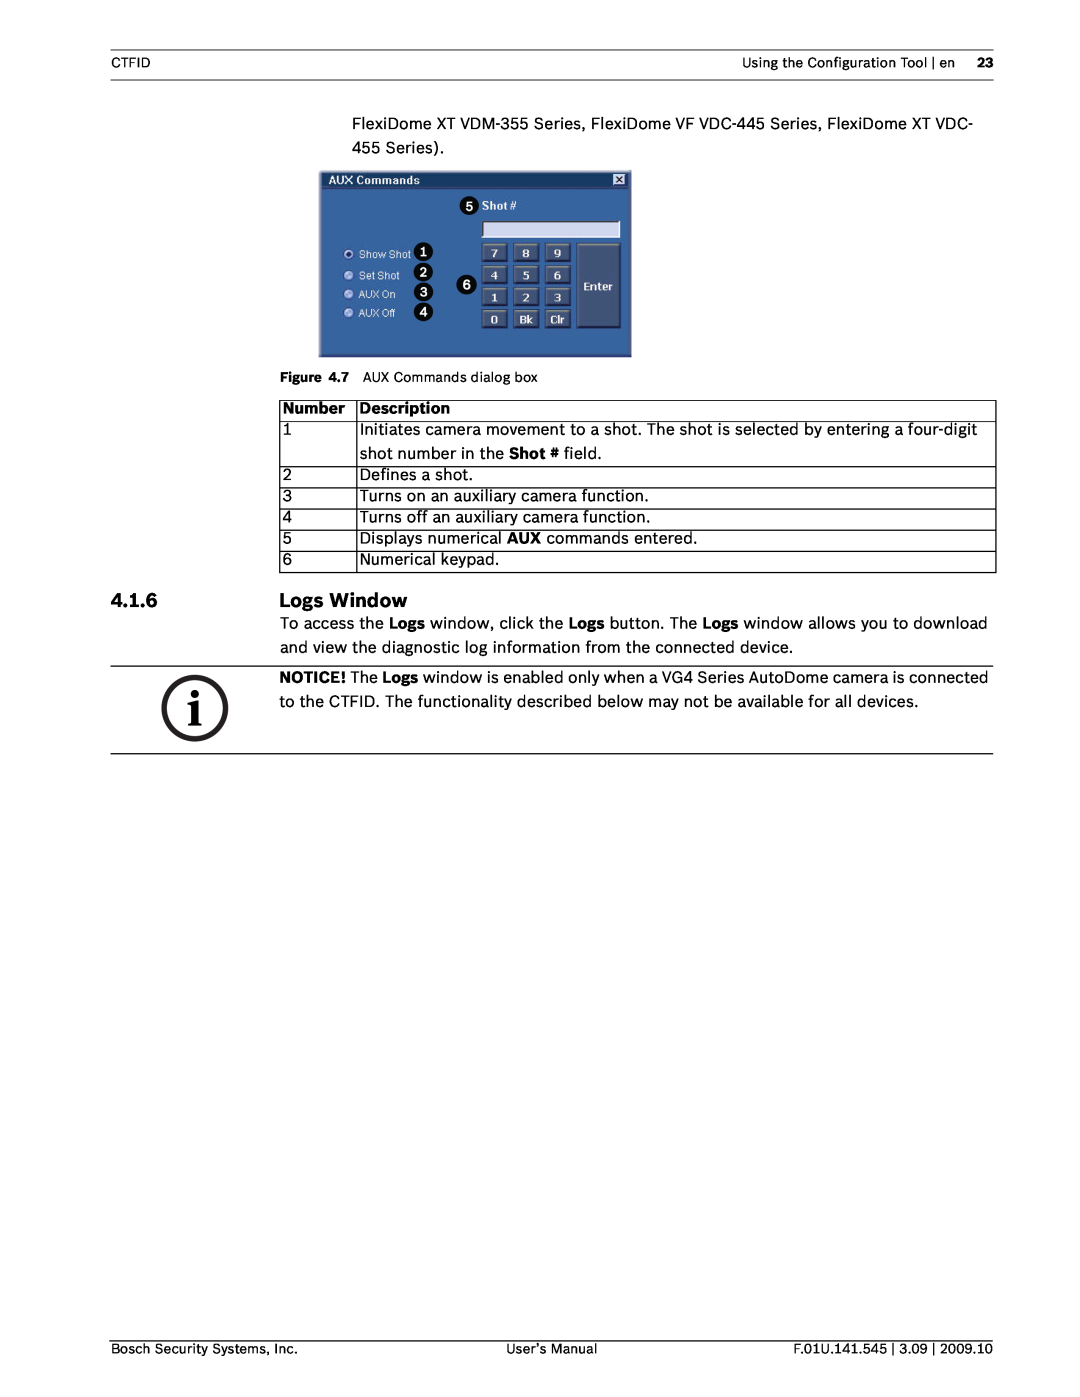 Bosch Appliances VP-CFGSFT user manual 4.1.6Logs Window 